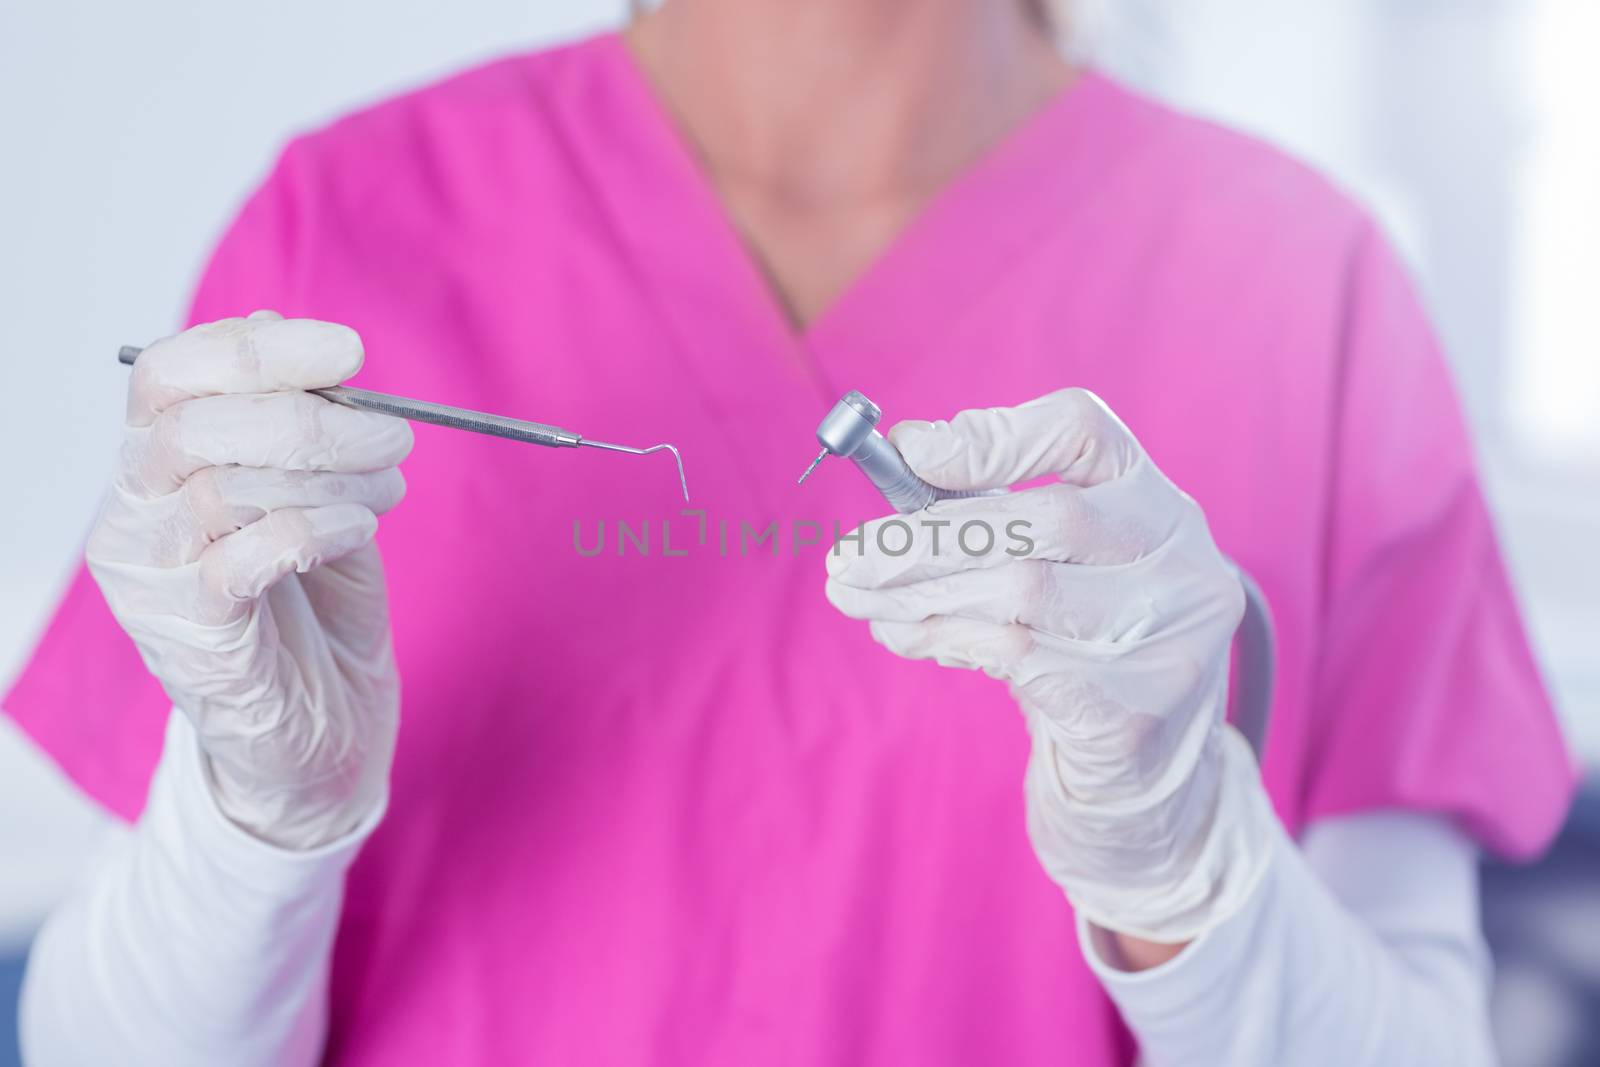 Dentist in pink scrubs holding tool by Wavebreakmedia